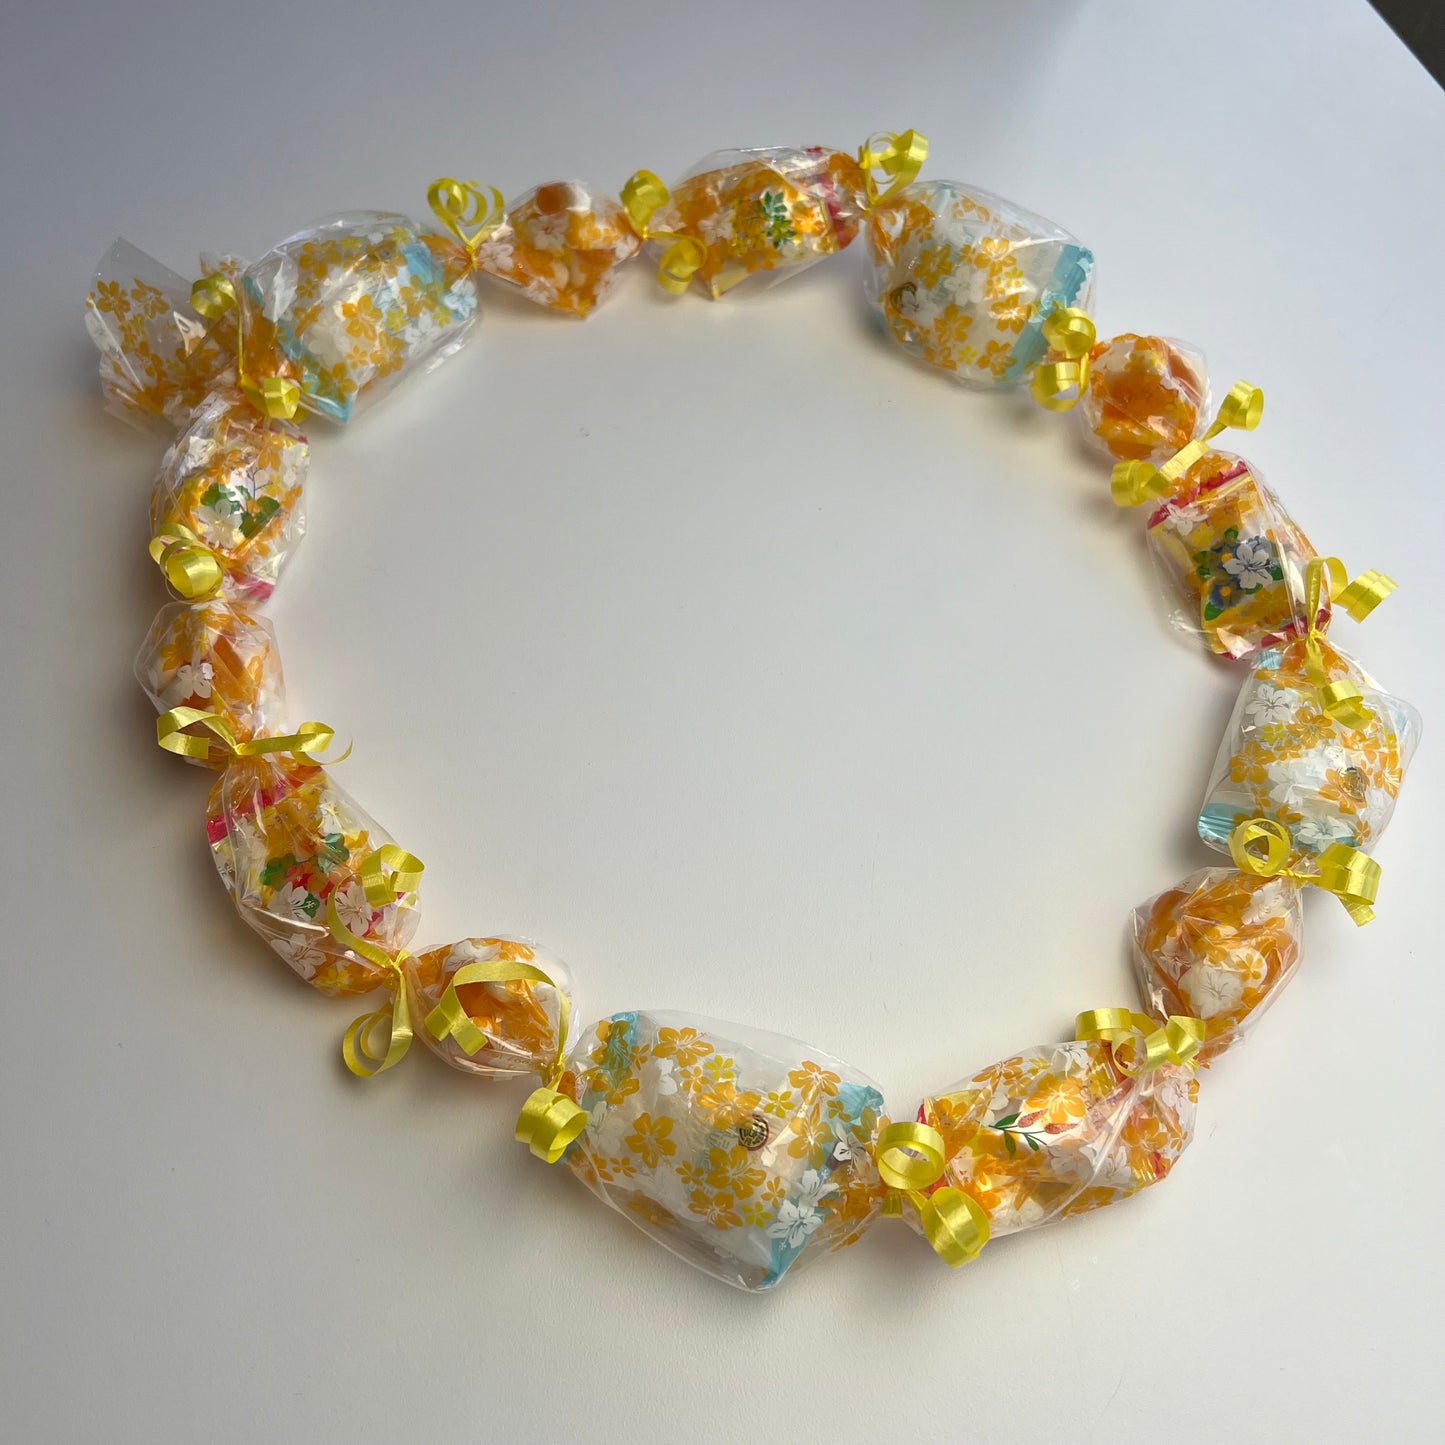 Gummy Eggs & Marshmallow Candy Lei | by Daphne Kauahi’ilani Jenkins